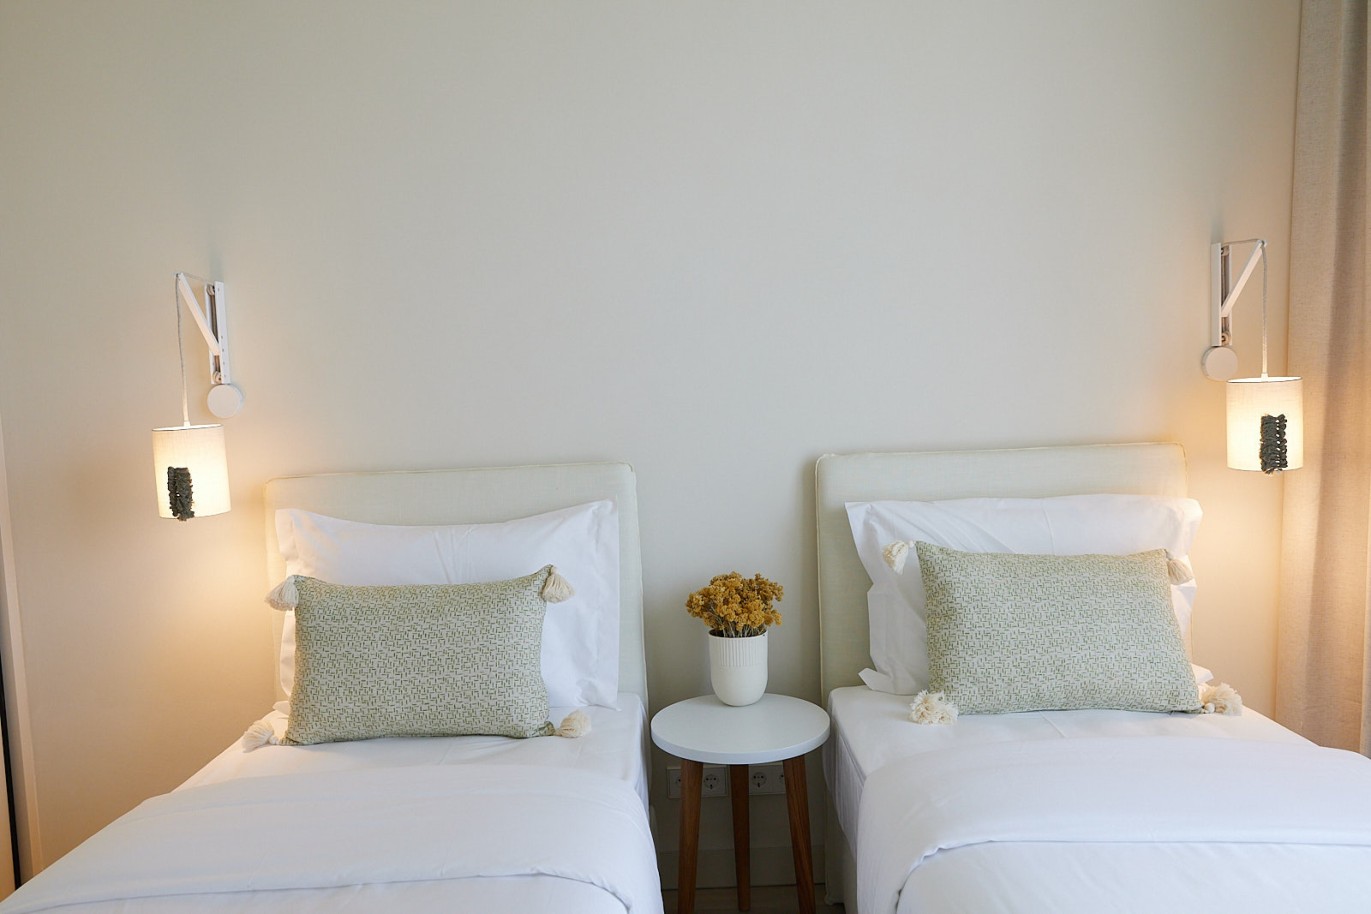 2 bedroom apartment in resort, for sale in Porches, Algarve_229237